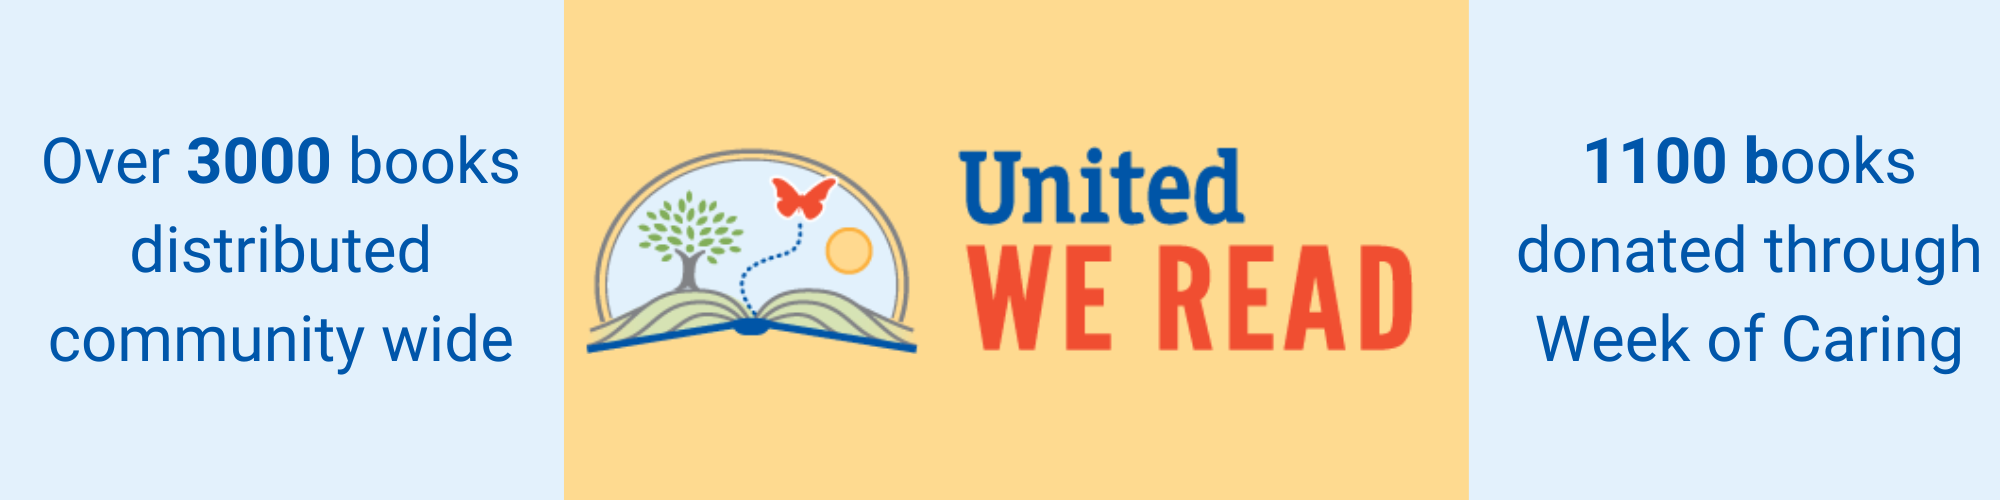 United We Read